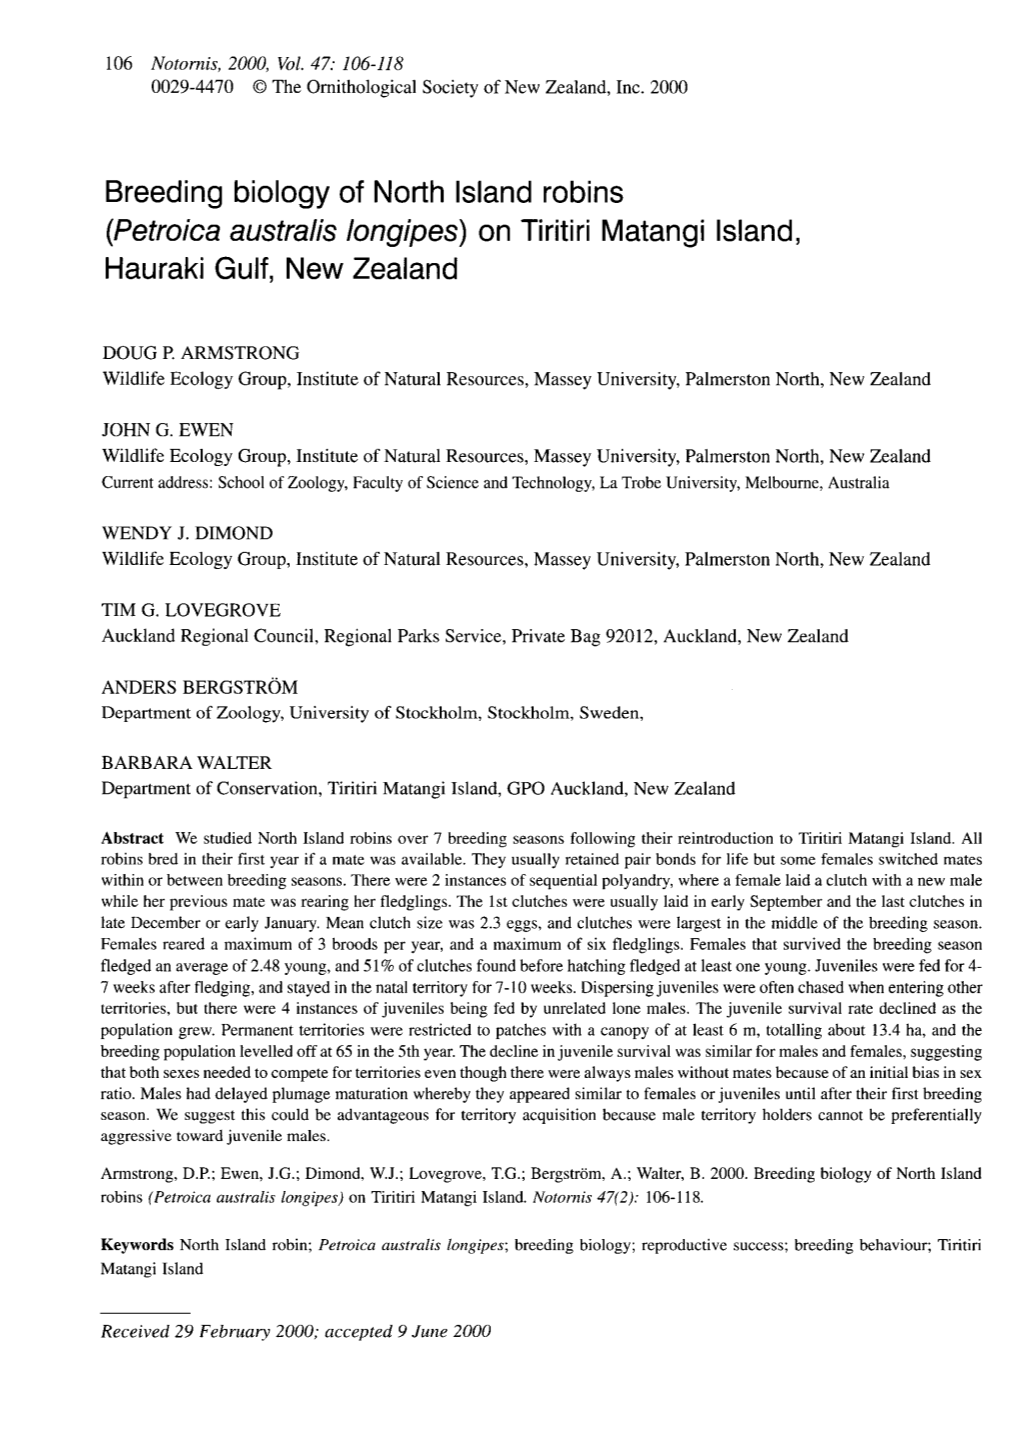 Breeding Biology of North Island Robins (Petroica Australis Longipes) on Tiritiri Matangi Island, Hauraki Gulf, New Zealand